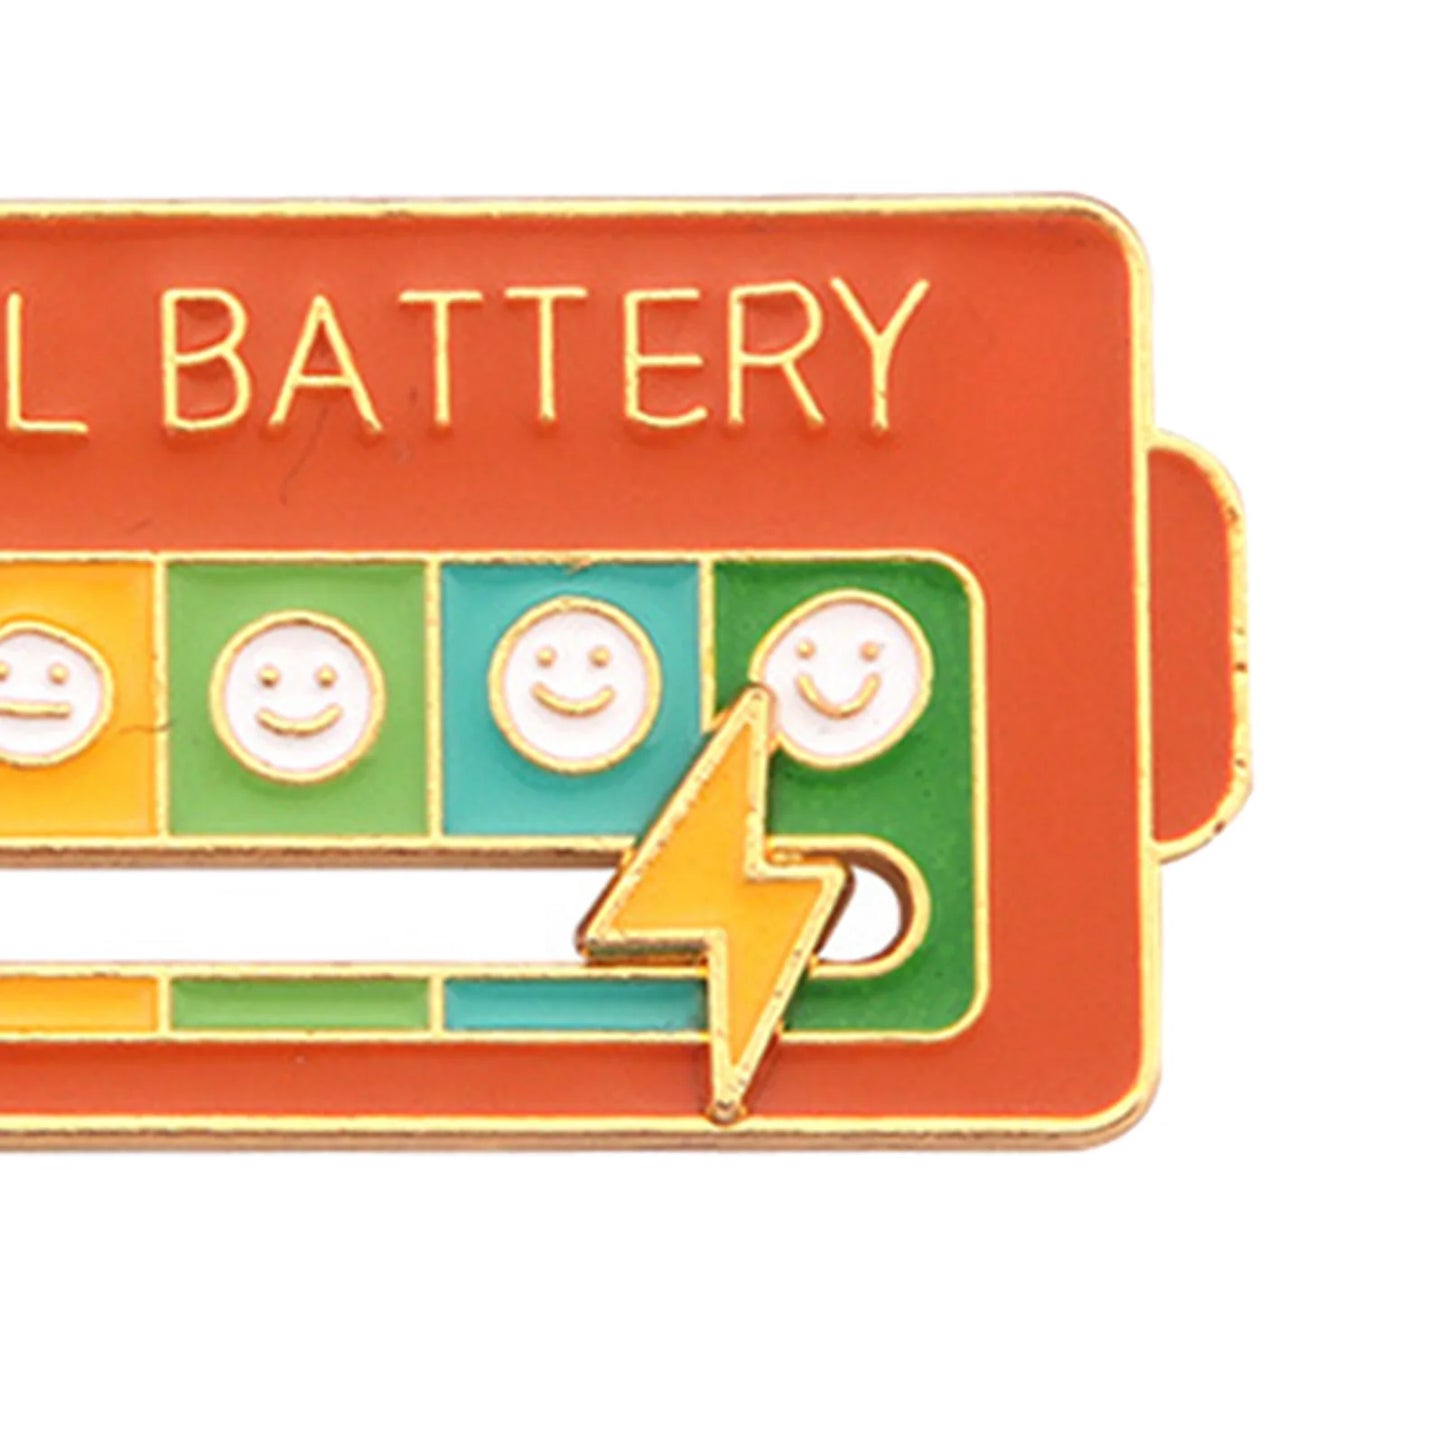 Enamel Pin - Sarcastic - Introvert - Social Battery Pins